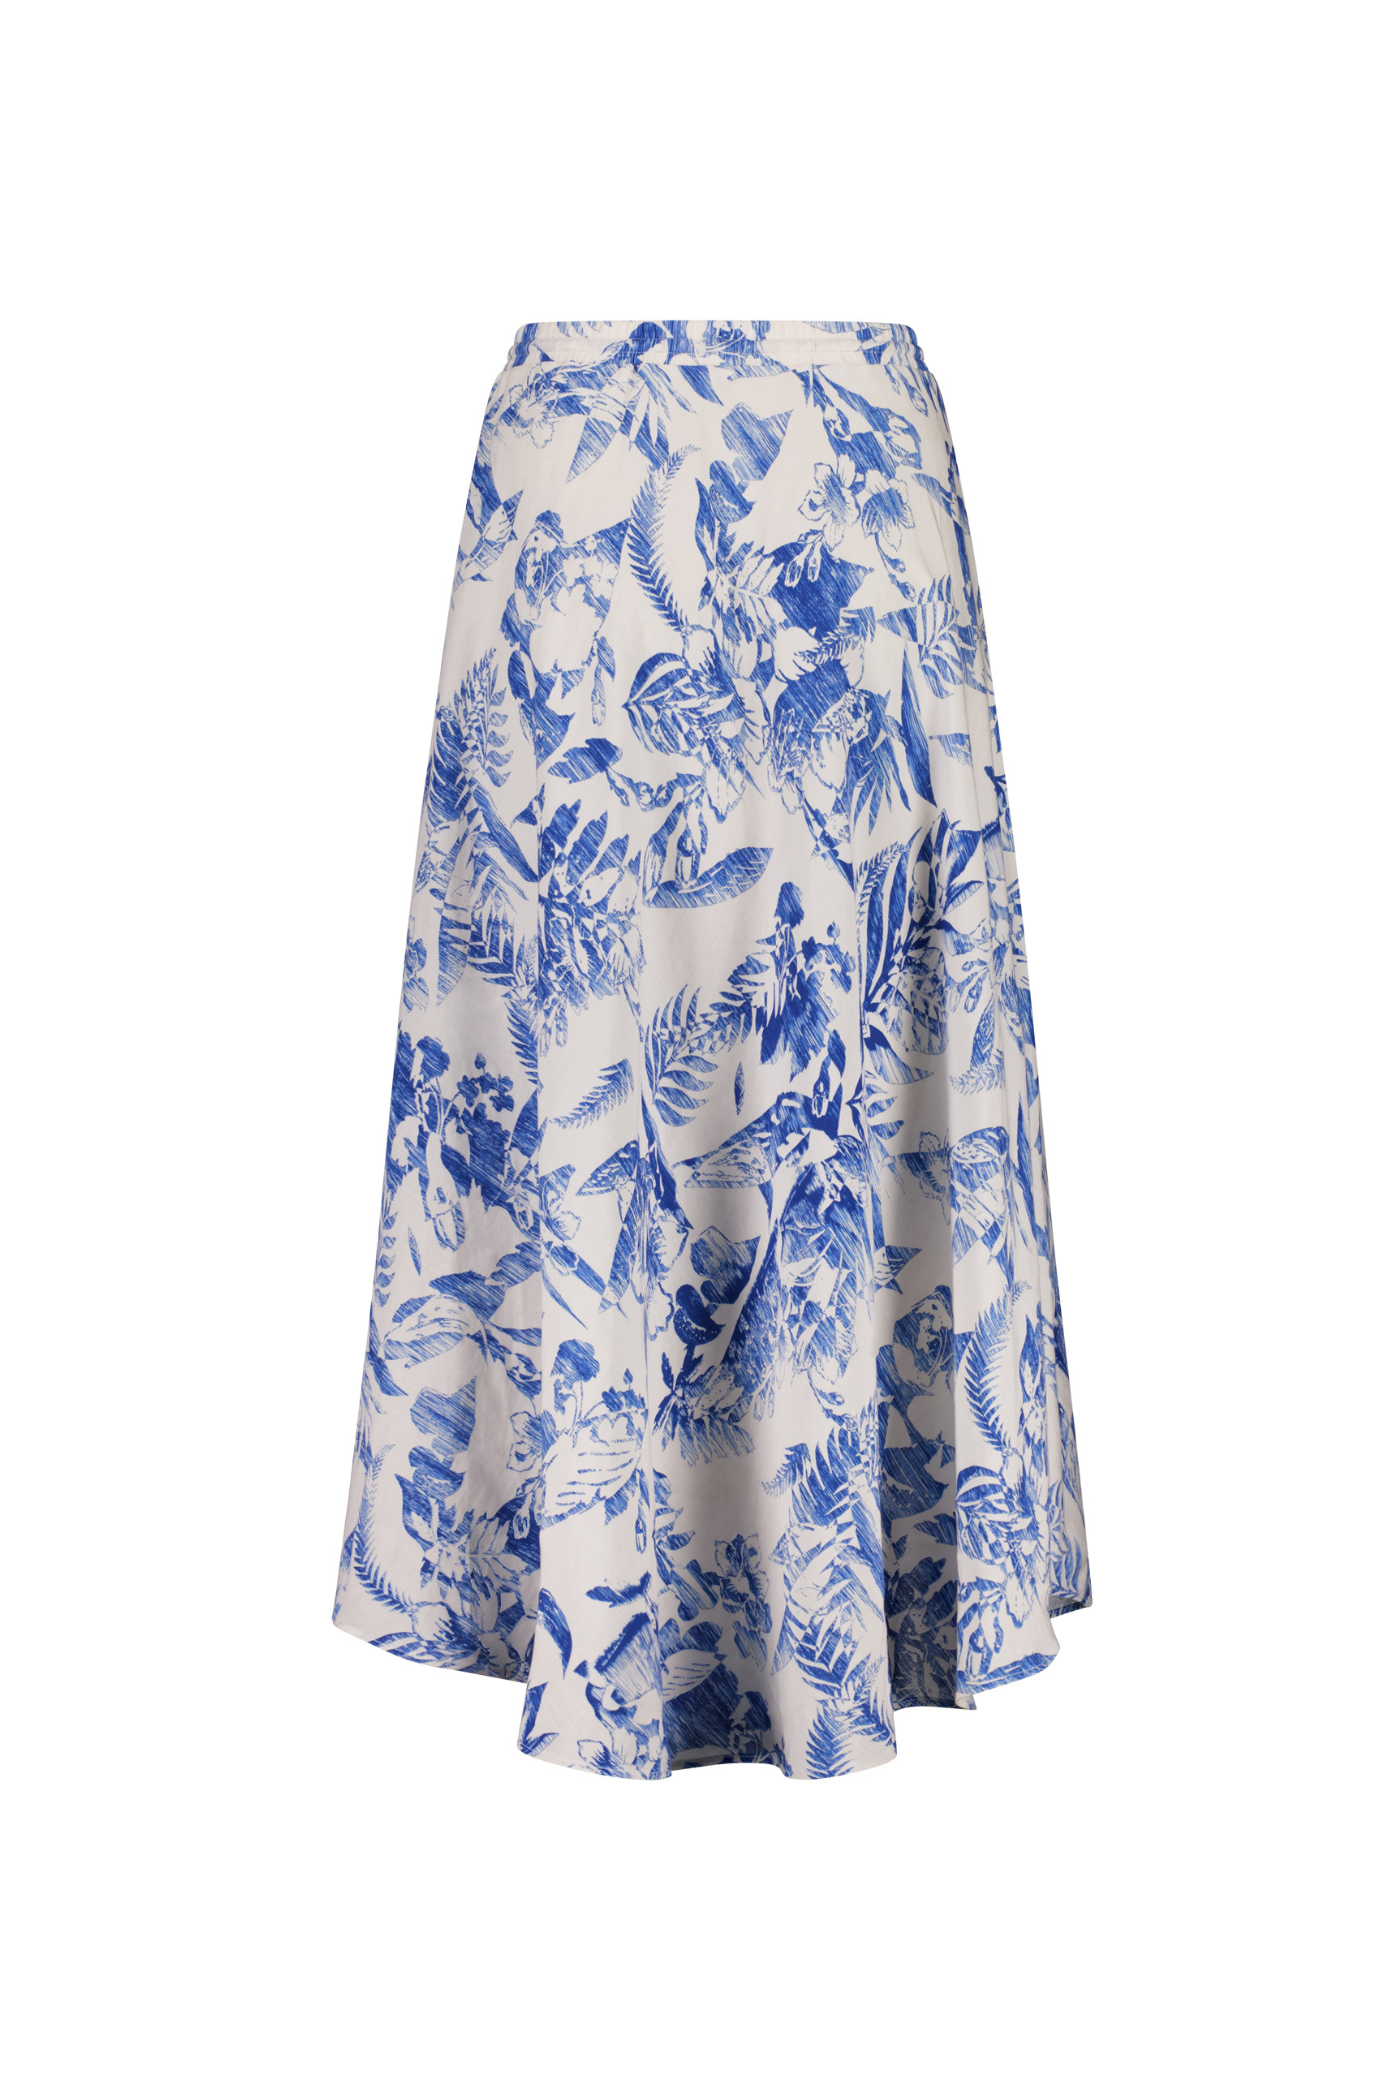 Drawstring waist linen maxi skirt in blue white tropical print